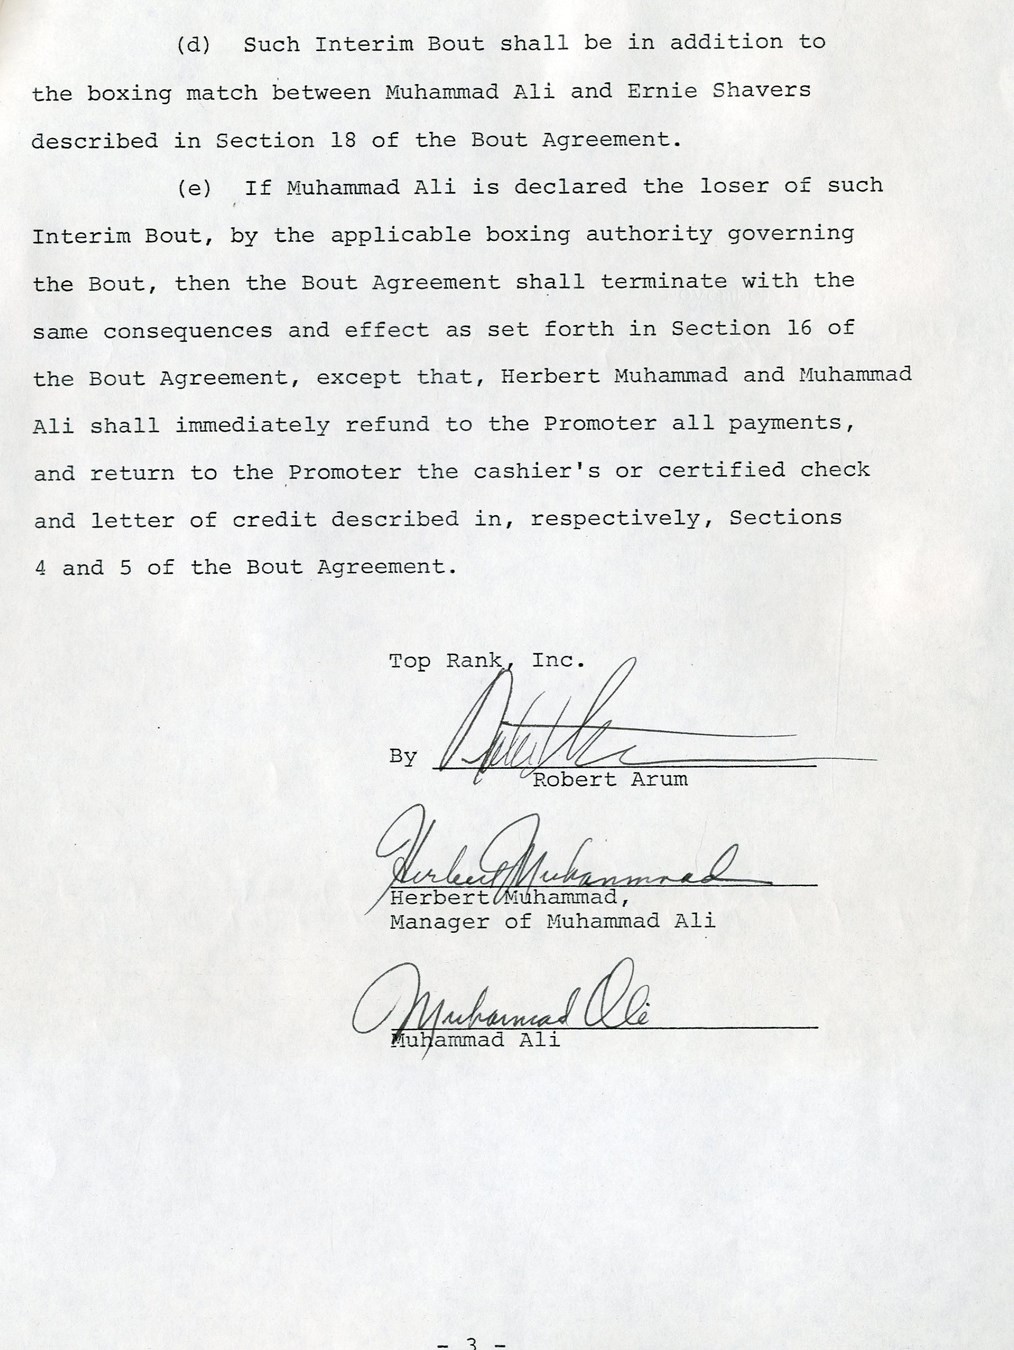 Muhammad Ali Signed Fight Agreement (1977)